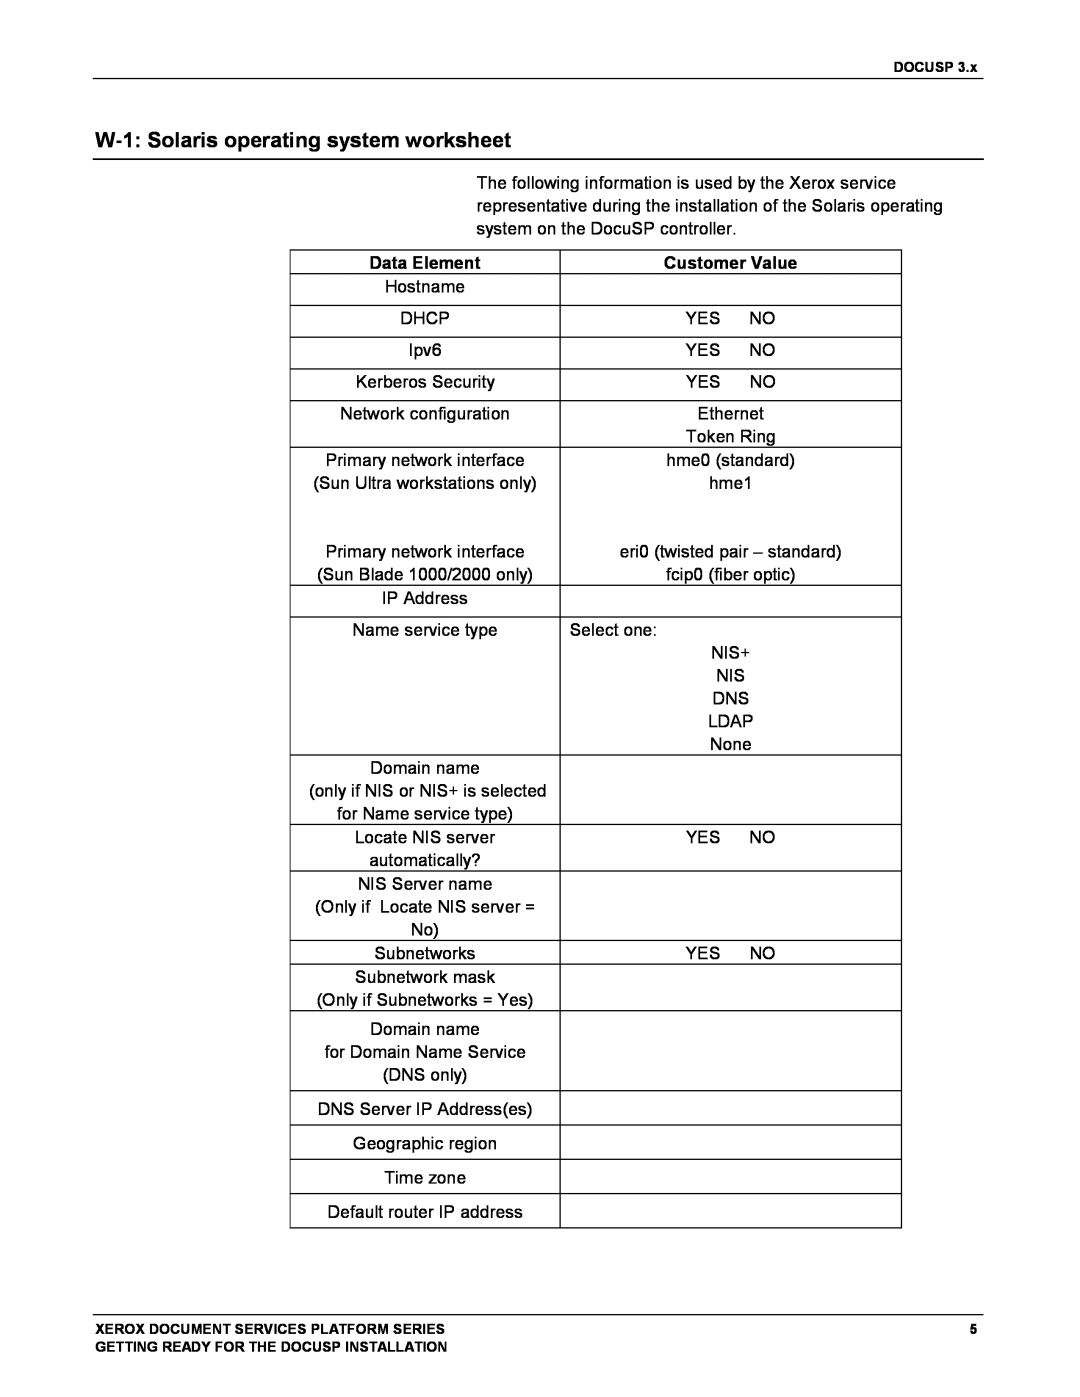 Xerox 701P38969 manual W-1:Solaris operating system worksheet, Data Element, Customer Value 